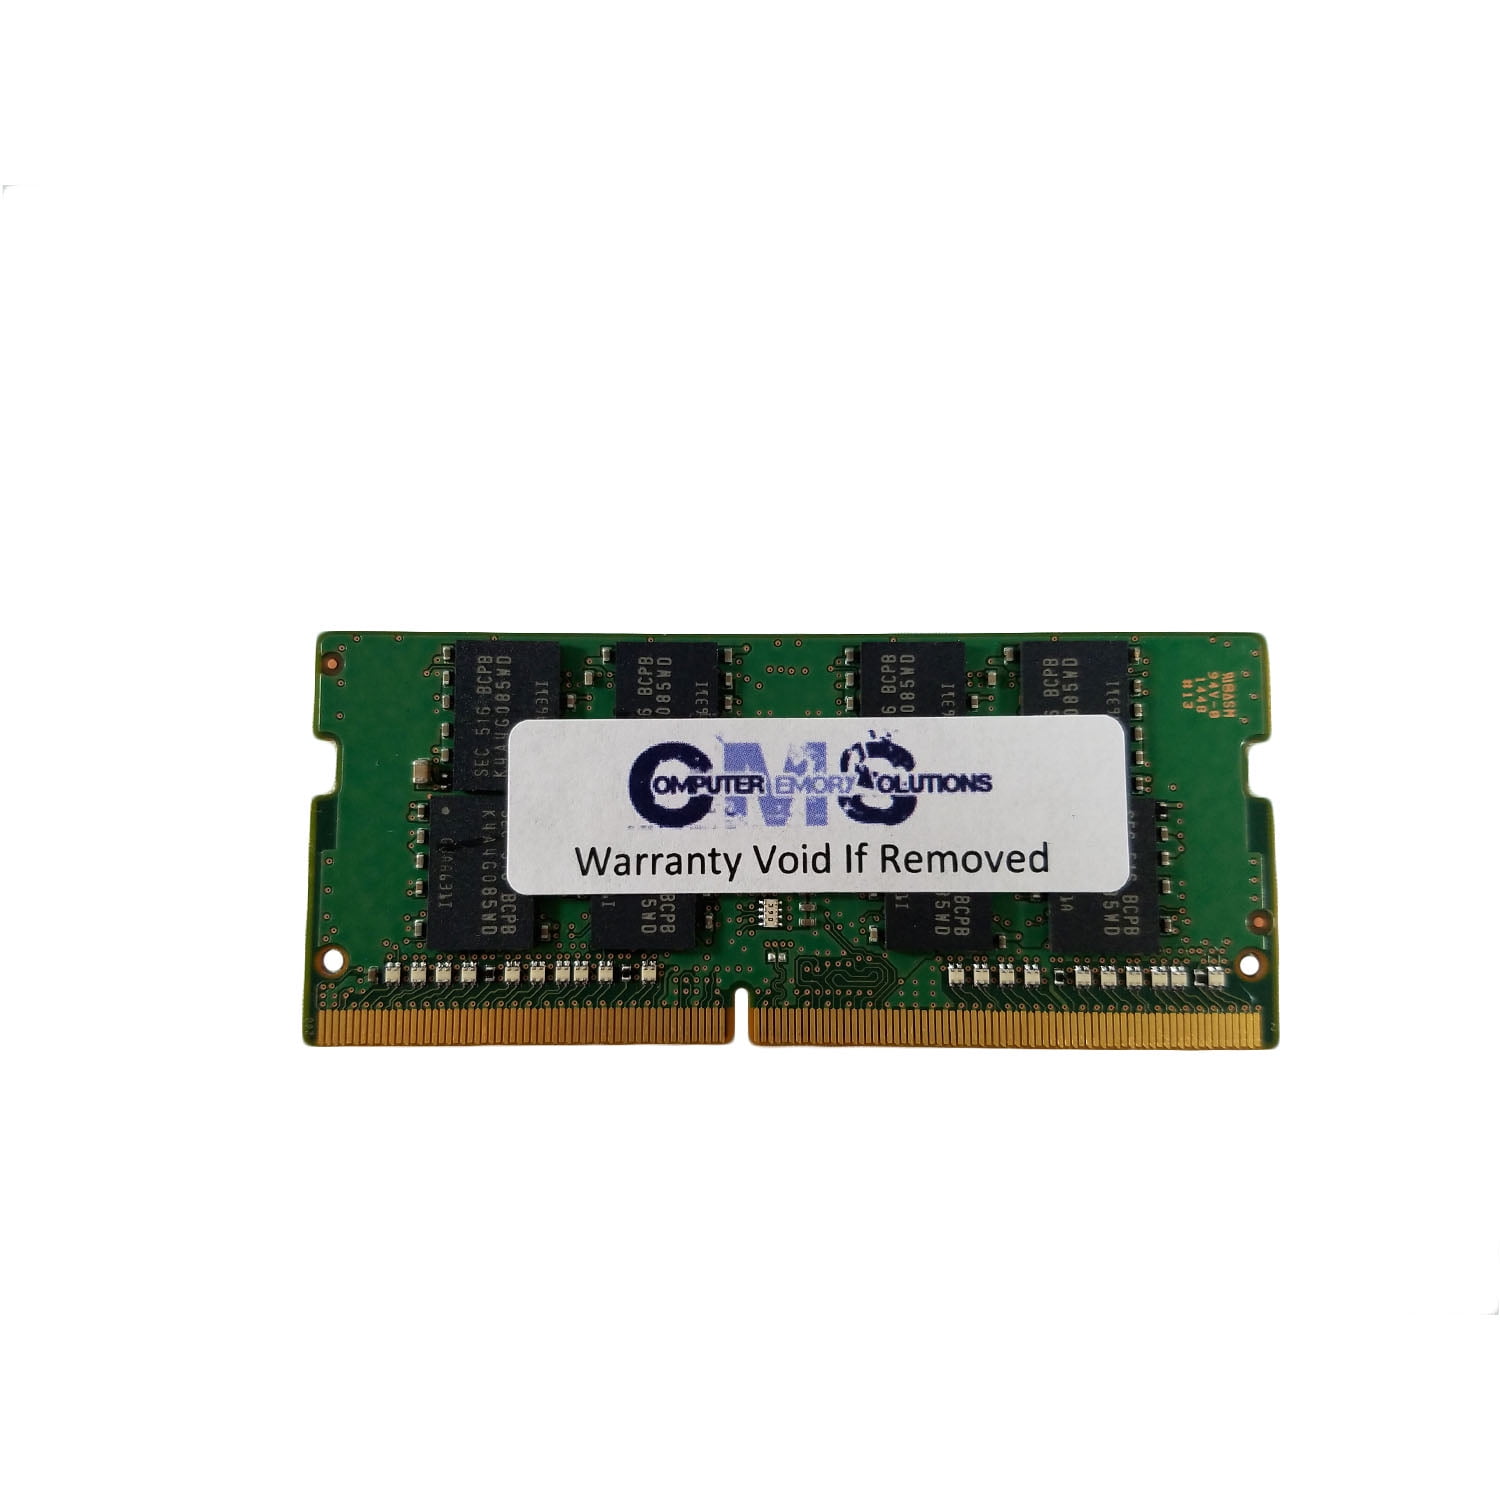 MSI MAG Z590 TORPEDO マザーボード ATX 第10・11世代CPU対応 Intel Z590チップセット搭載 MB524